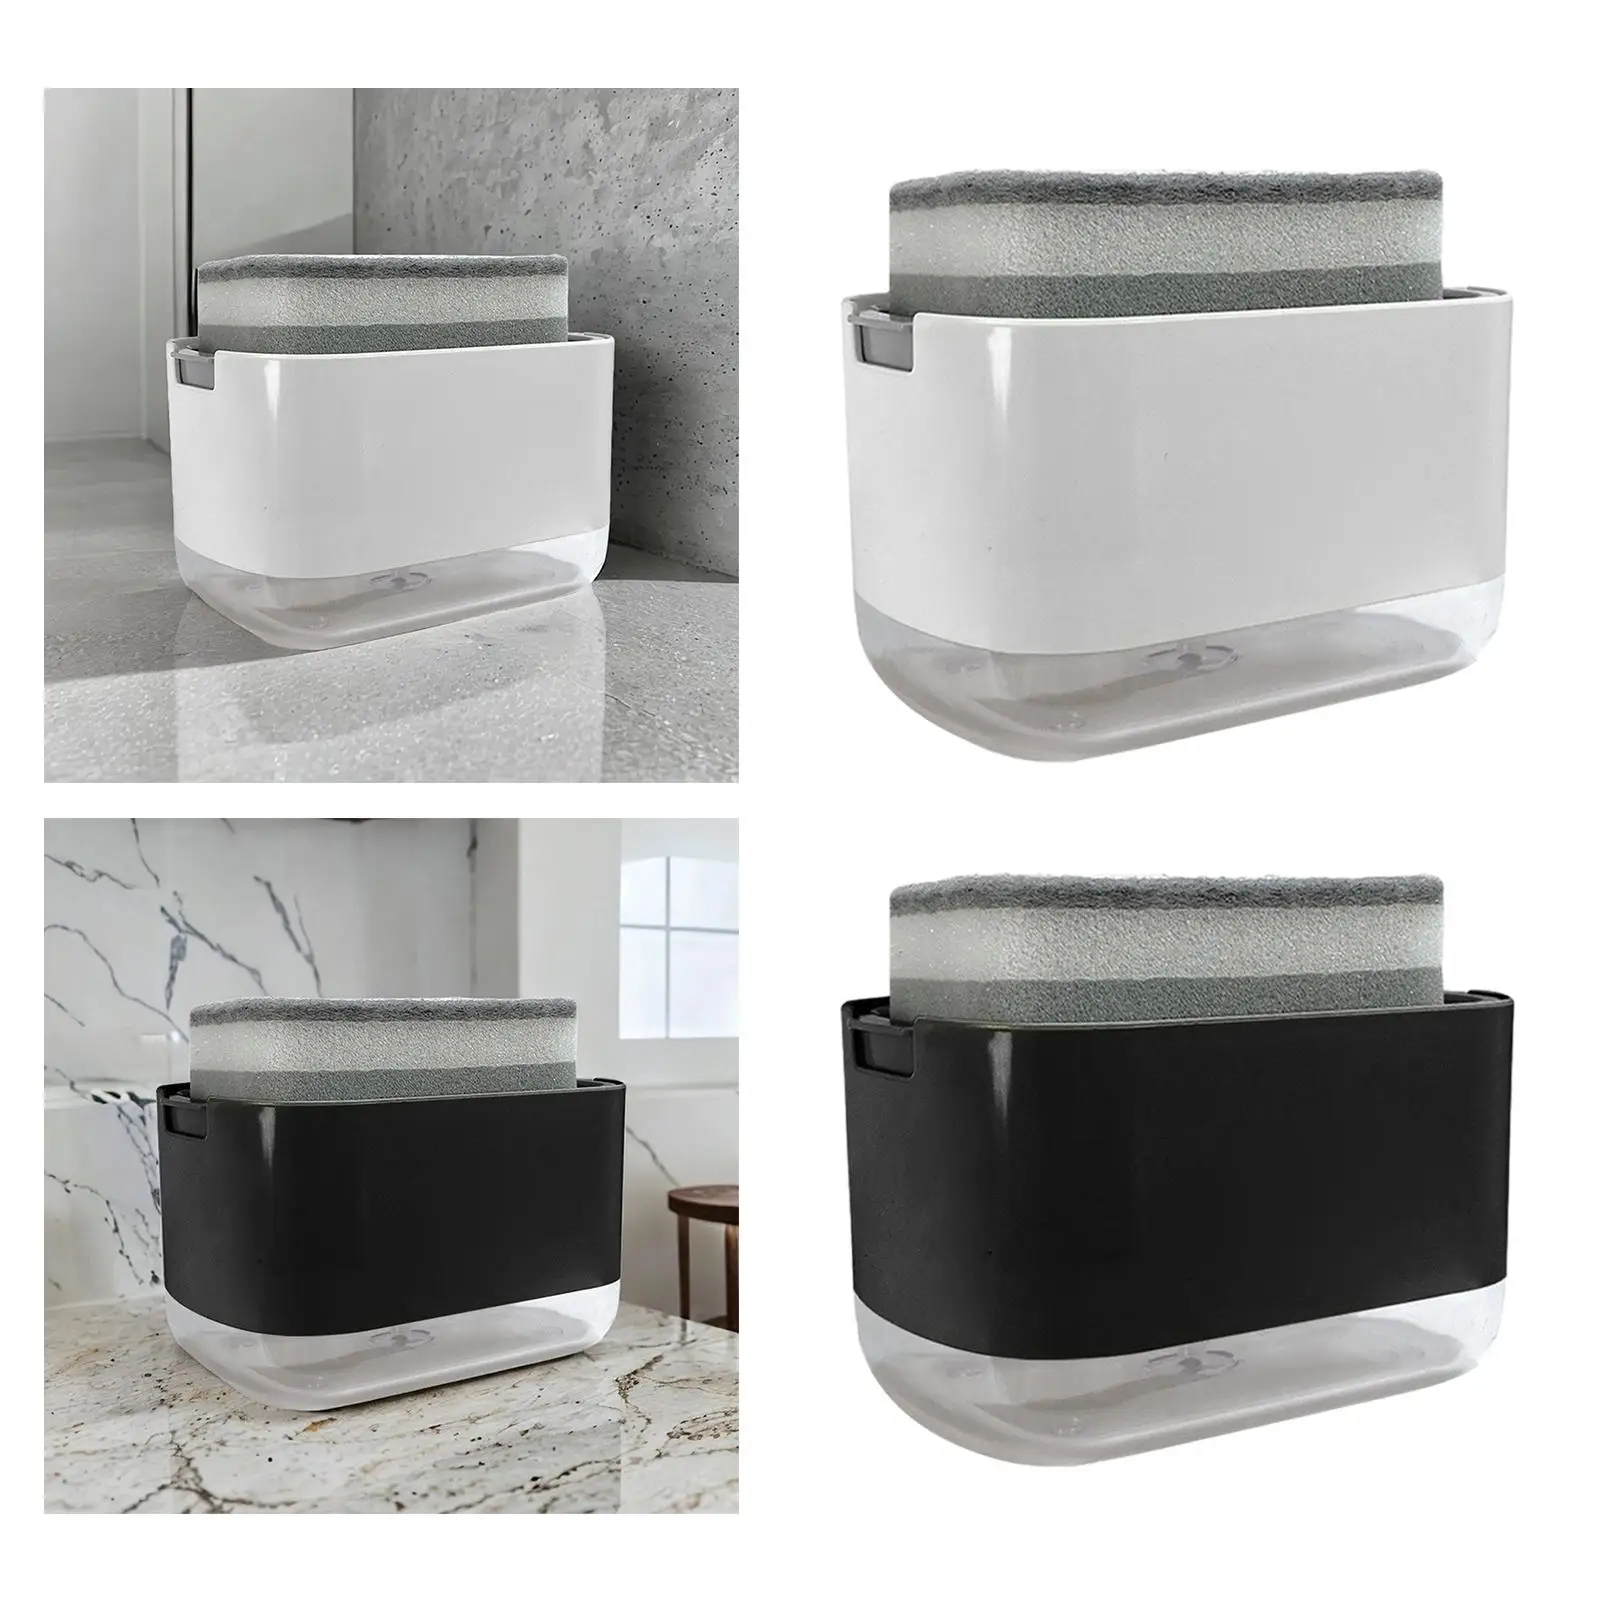 Dish Soap Dispenser with Sponge Holder Sink Organizer Farmhouse Decor Premium Quality Kitchen Sink Dishwashing Soap Dispenser